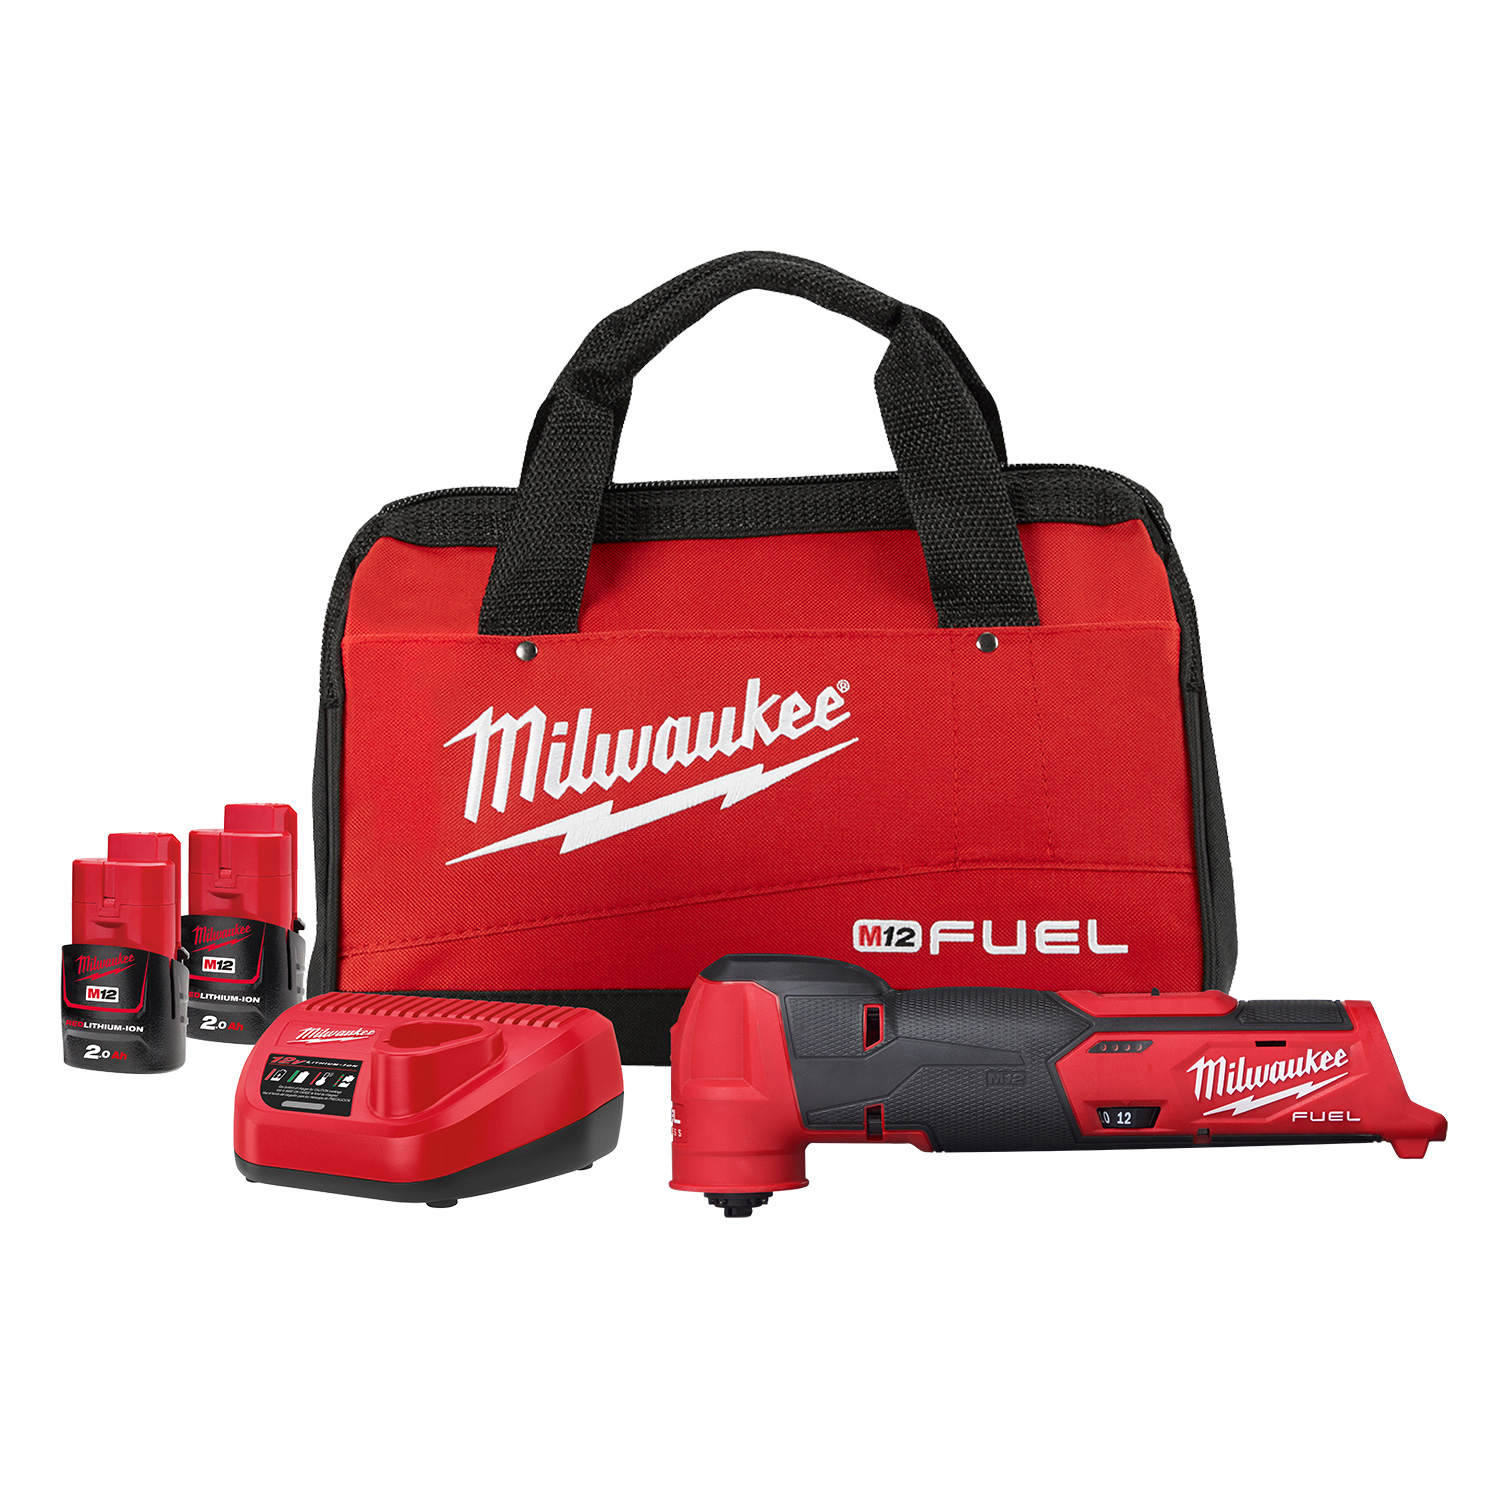 Milwaukee 12V Fuel Brushless Multi-Tool 2.0ah Set M12FMT-202B